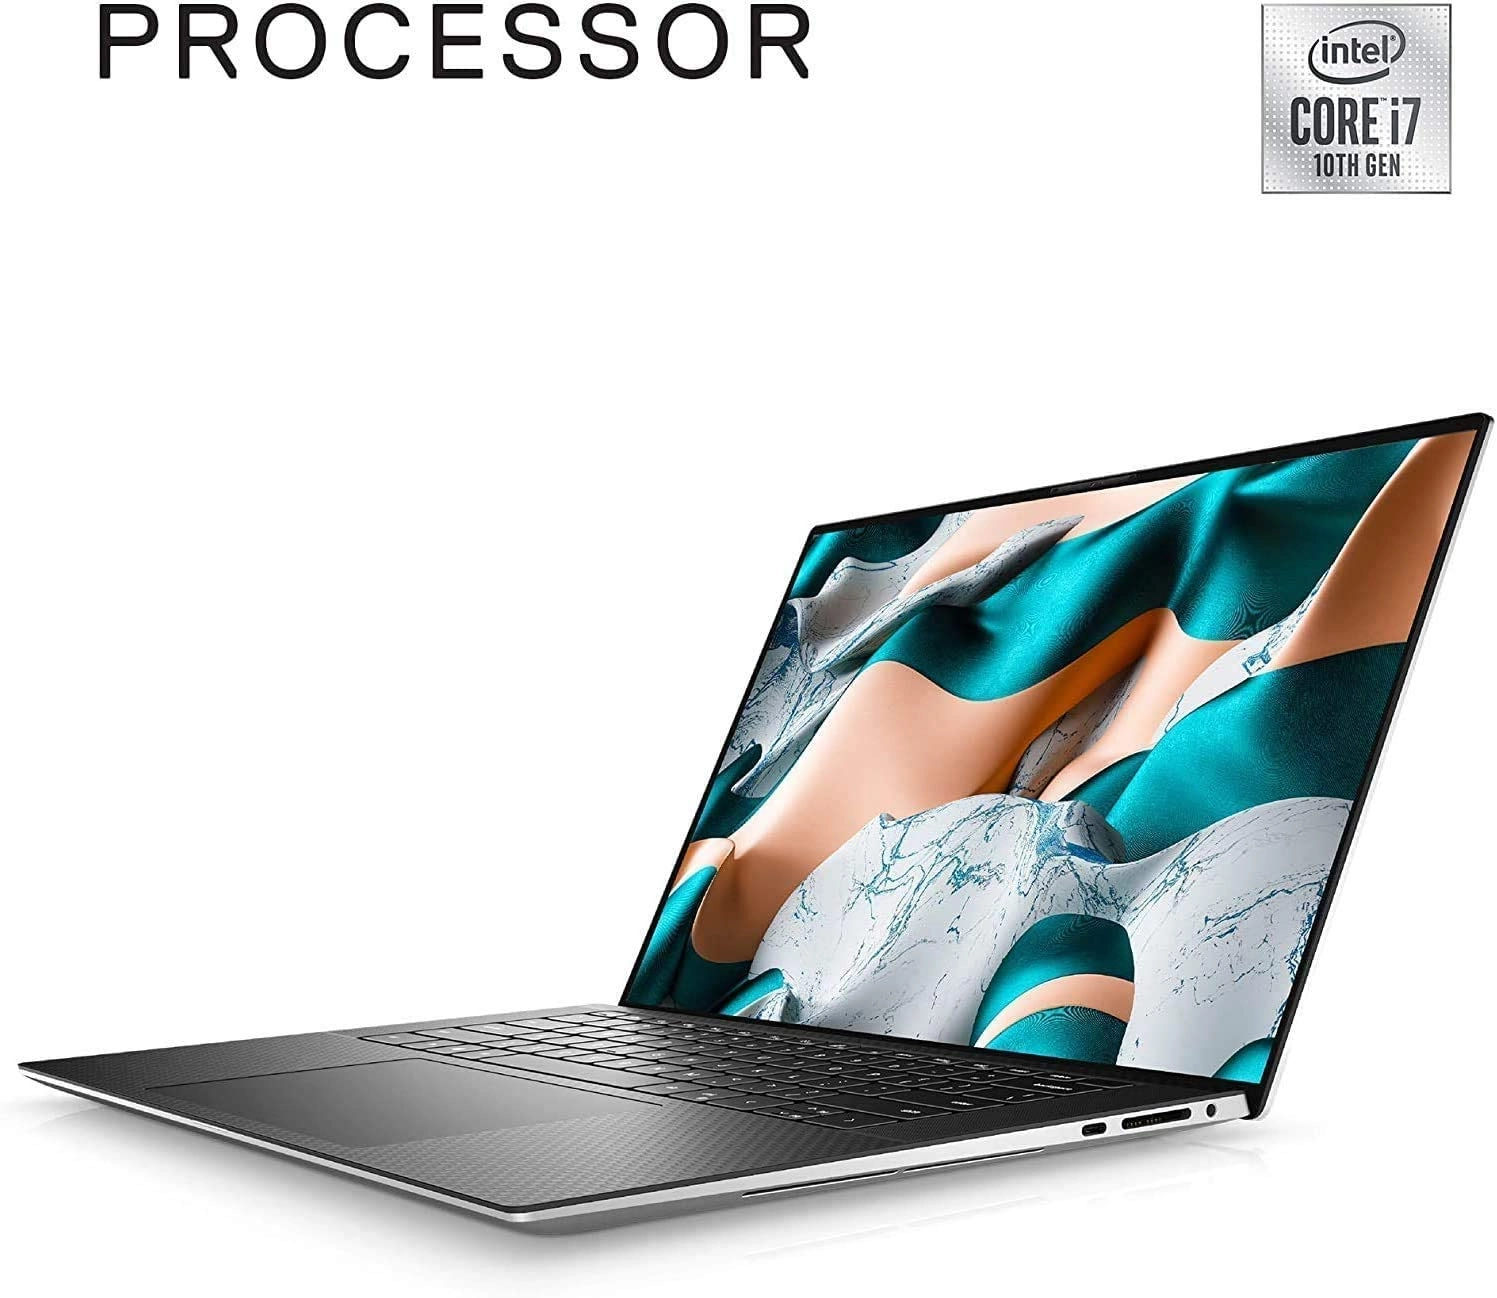 Dell XPS9500 laptop image